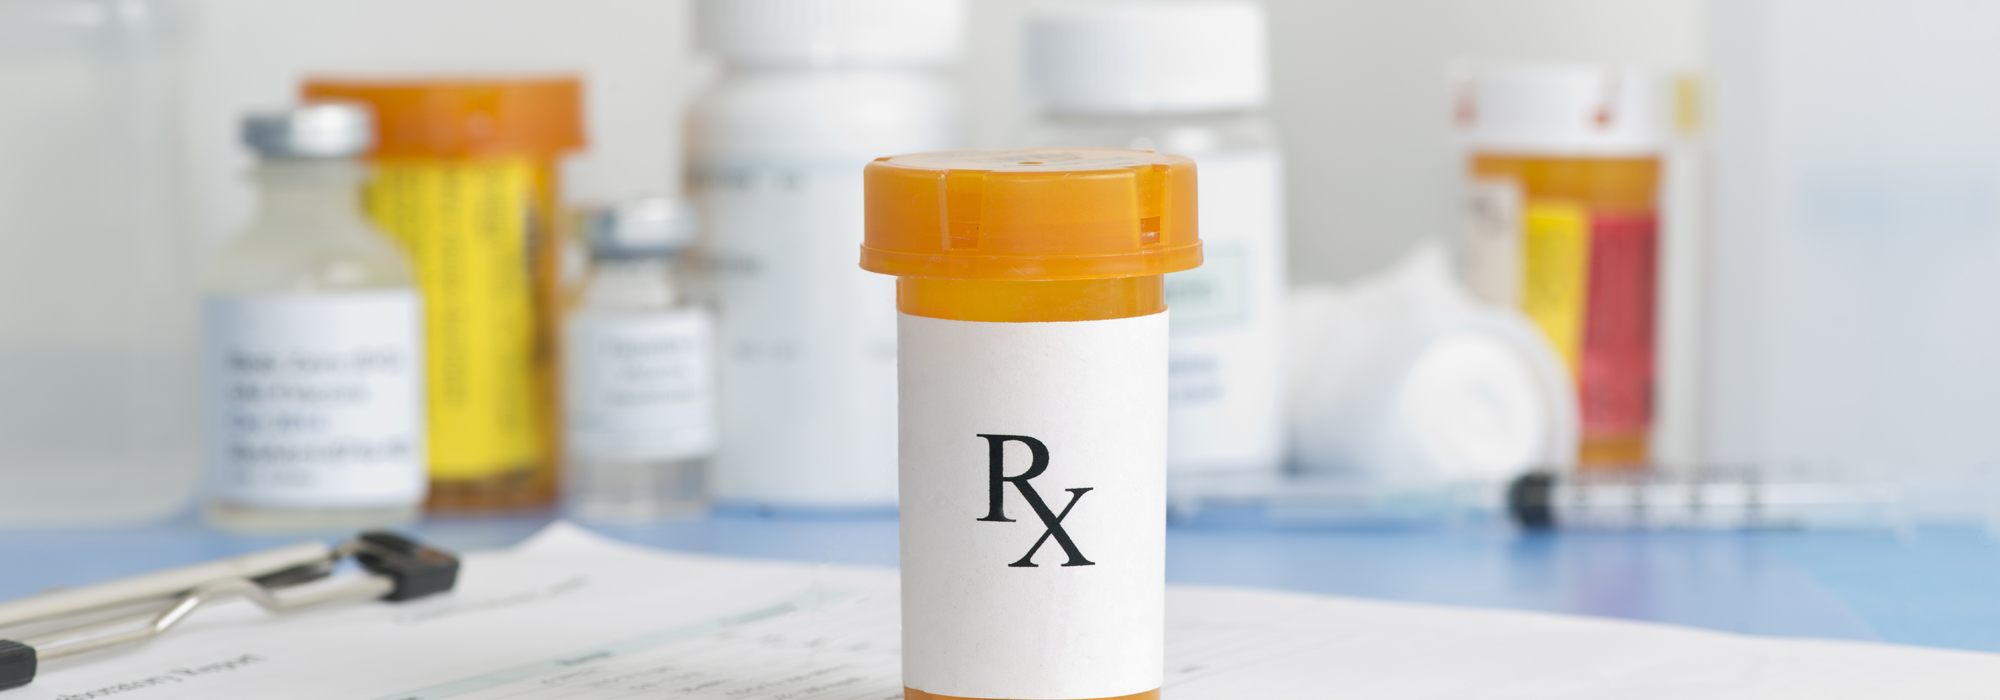 Canada needs a comprehensive strategy to improve prescription drug safety for seniors